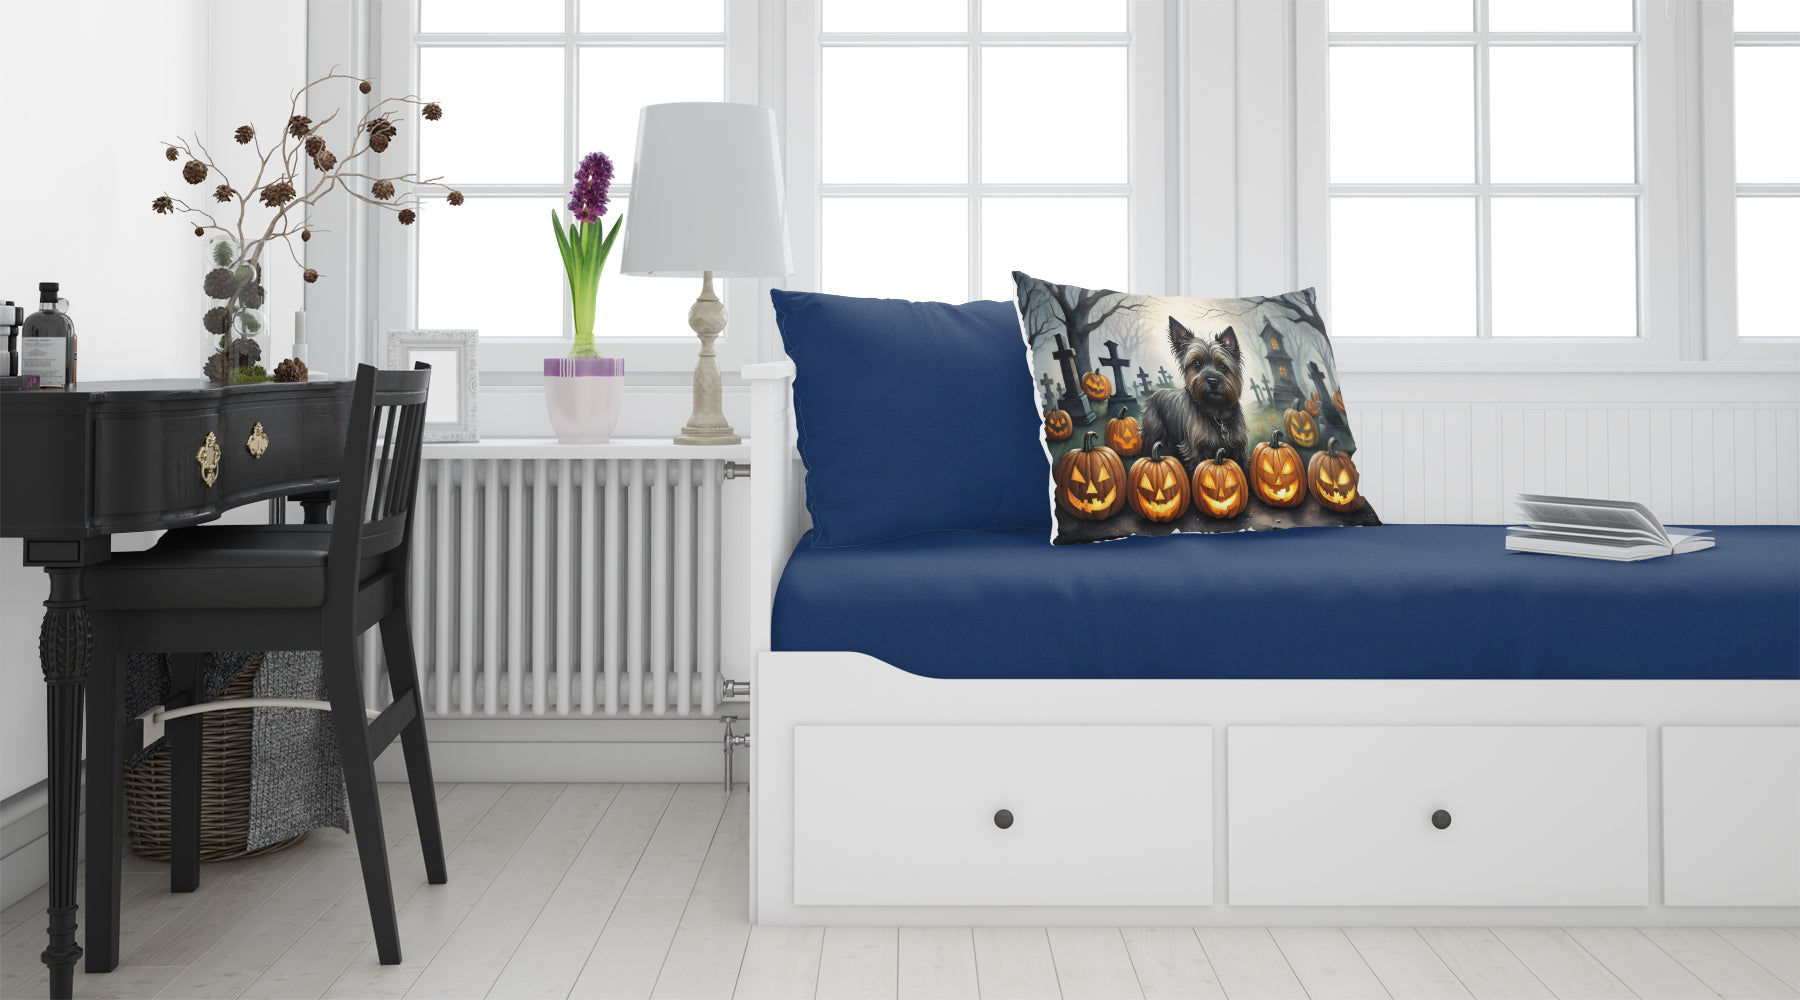 Buy this Cairn Terrier Spooky Halloween Fabric Standard Pillowcase